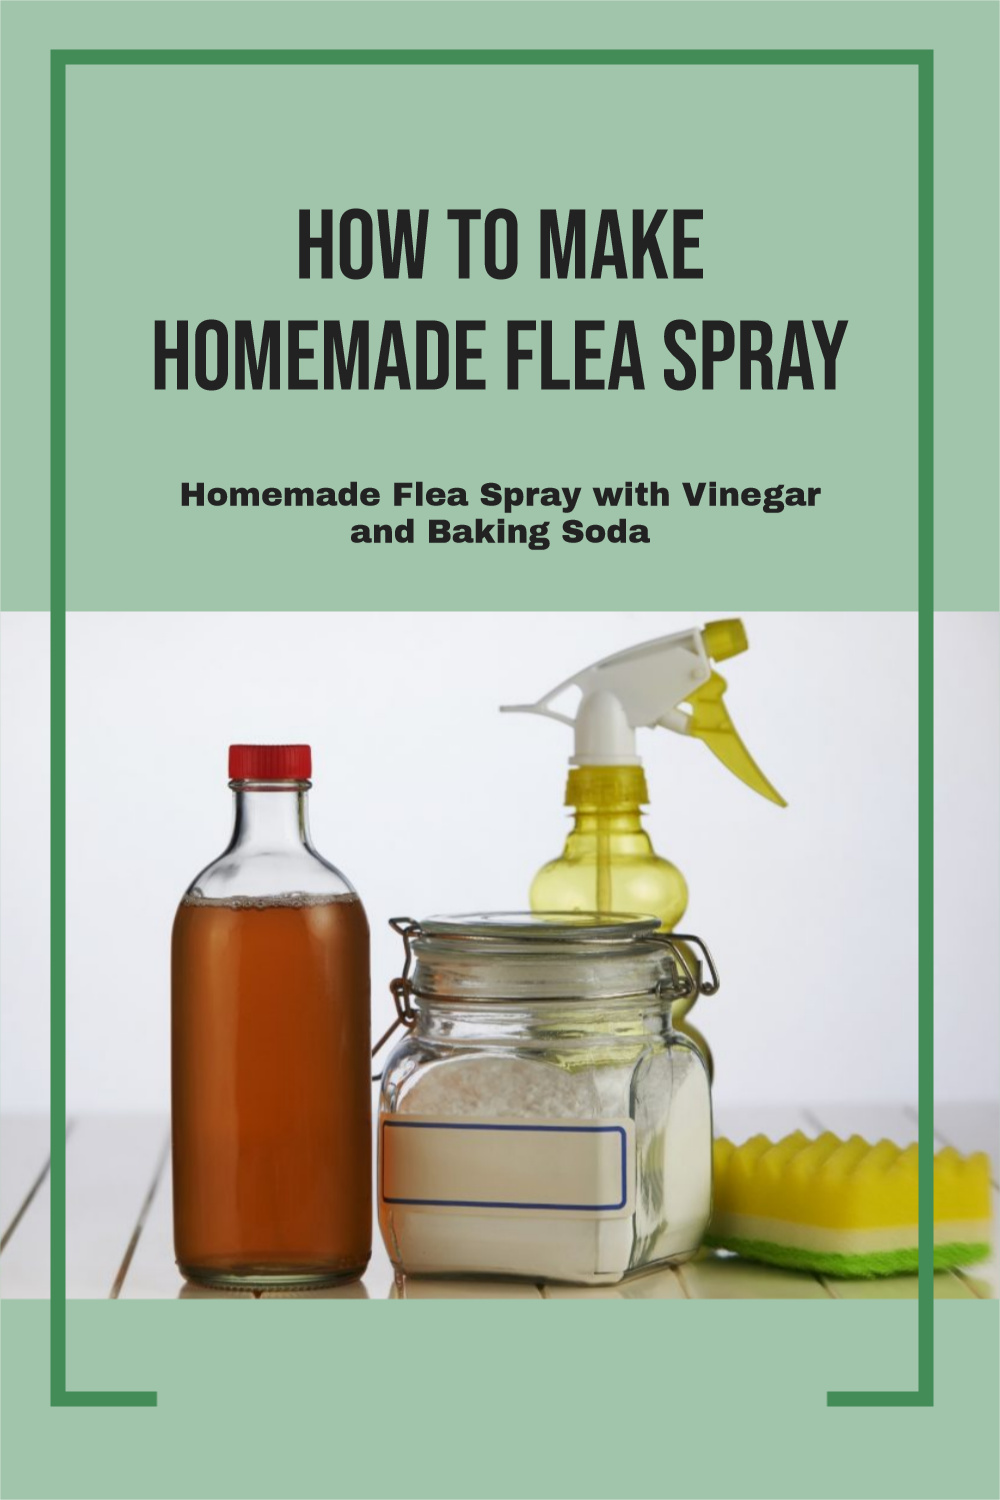 Homemade Flea Spray with Vinegar and Baking Soda Recipe